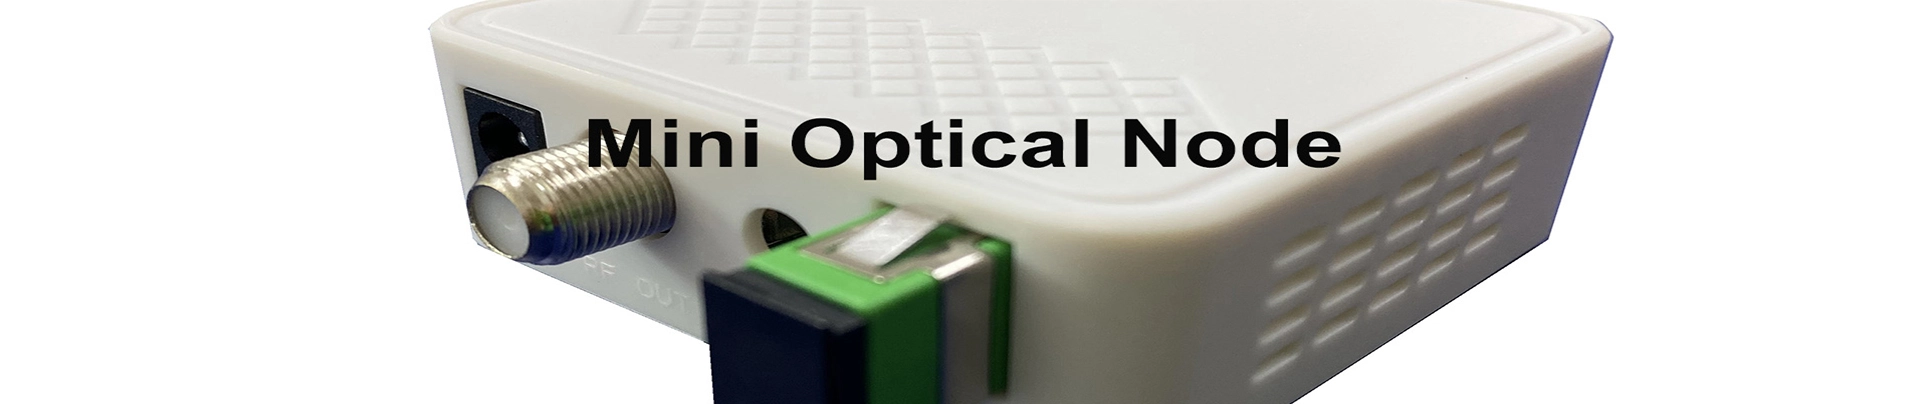 Mini Optical Node